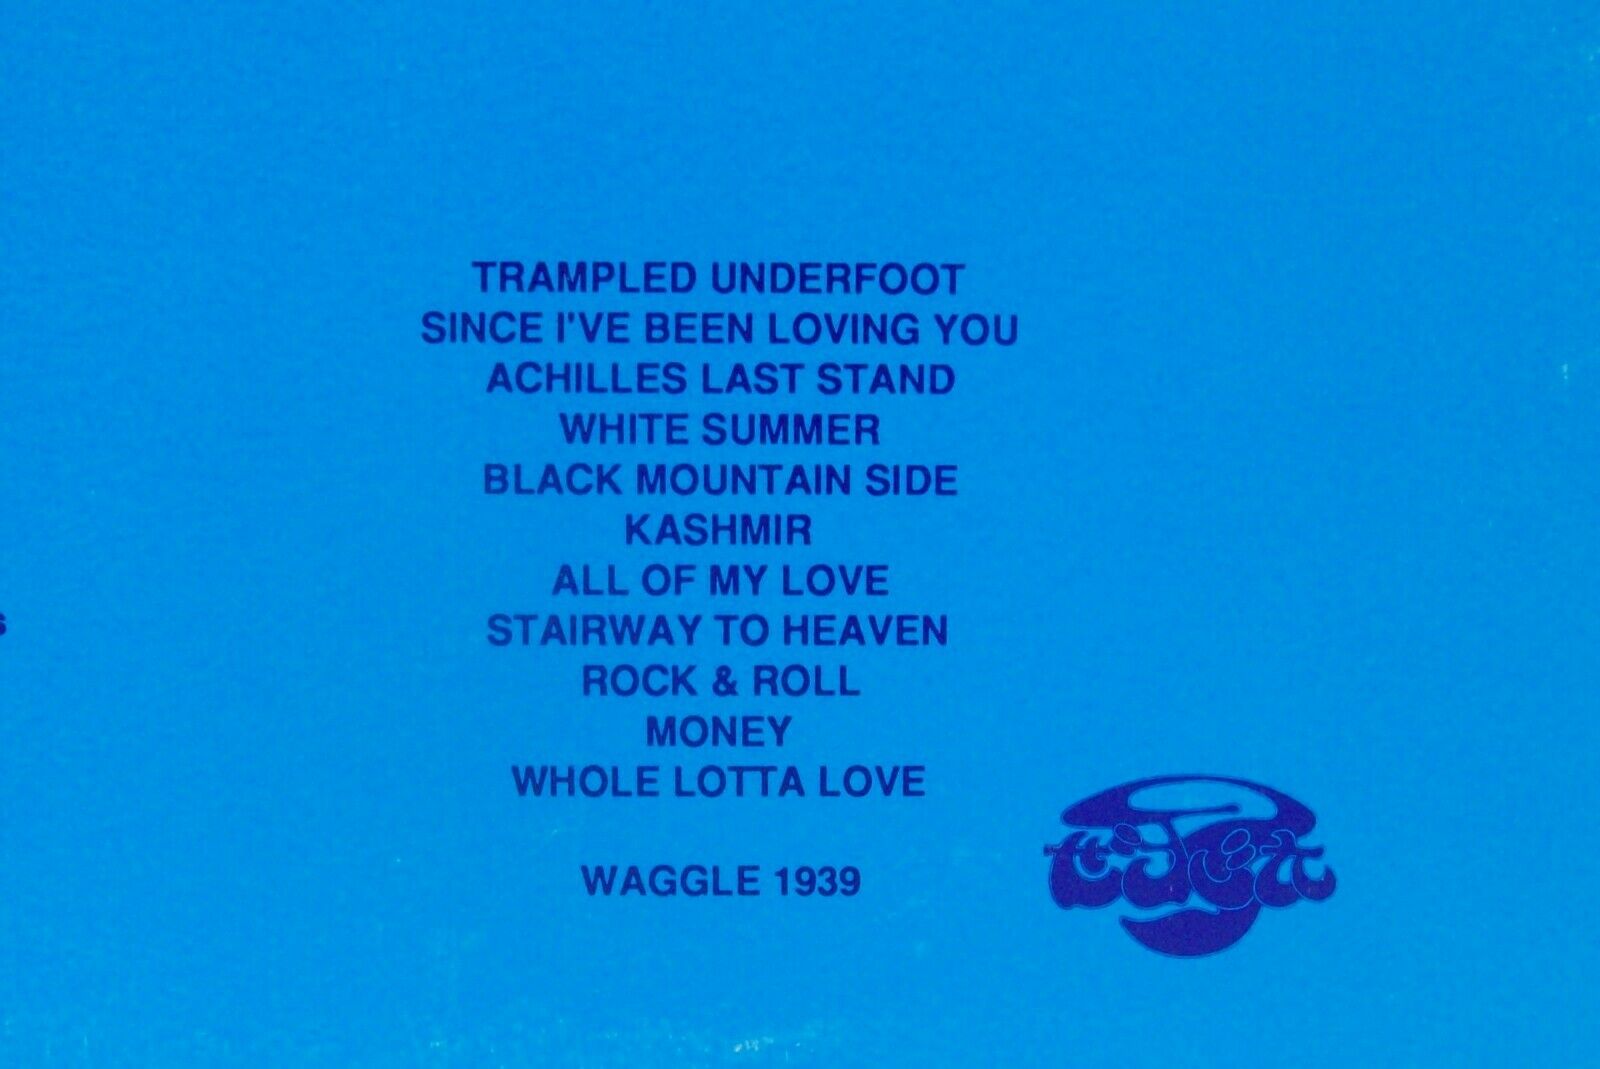 Pic 3 1985 Led Zeppelin "Dinosaur" 2-LP Vinyl Record (WAG 1939) NM/EX 1980 Live Show